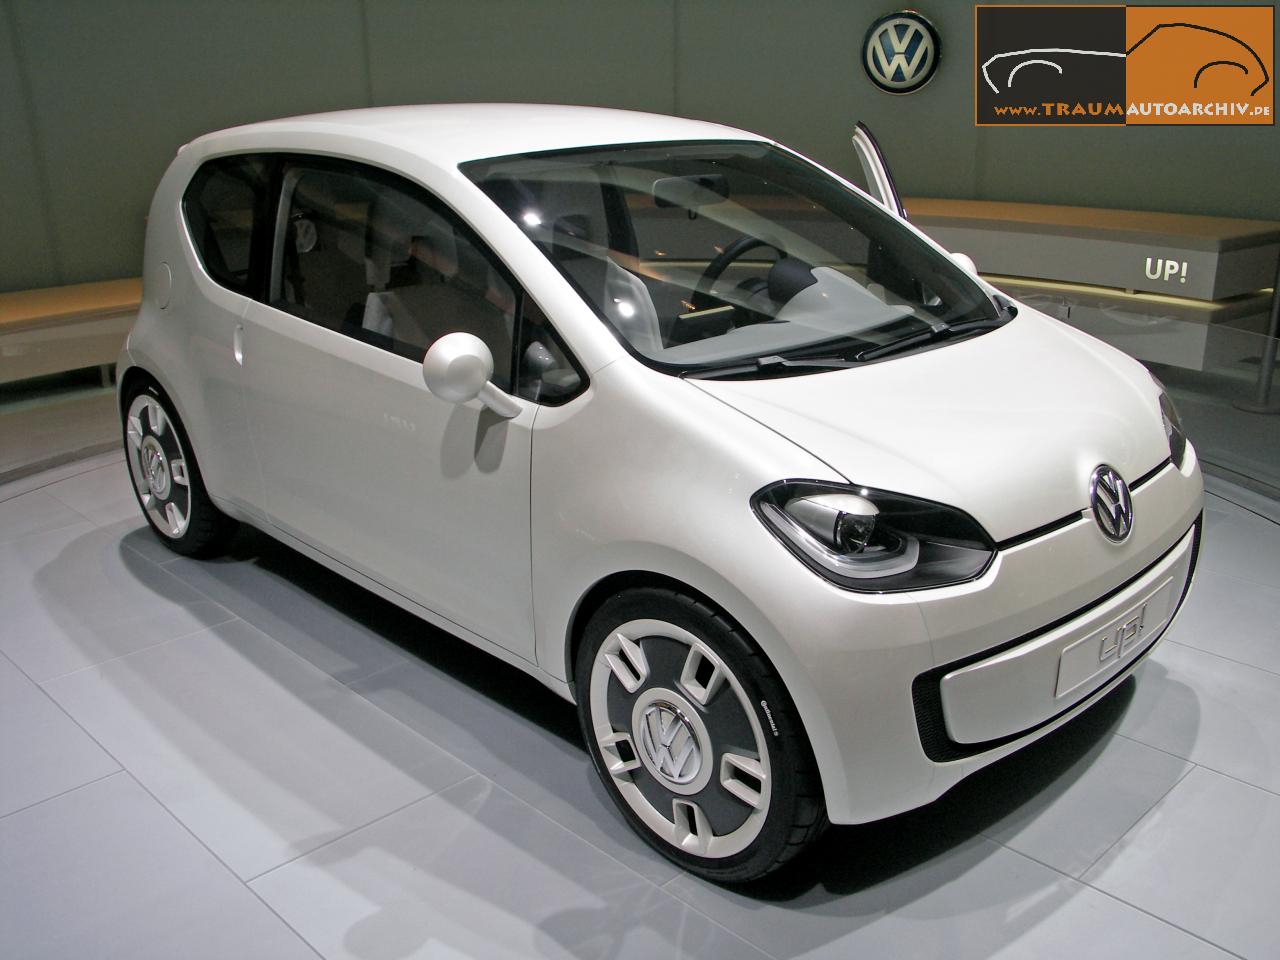 VW Up '2007.jpg 114.9K